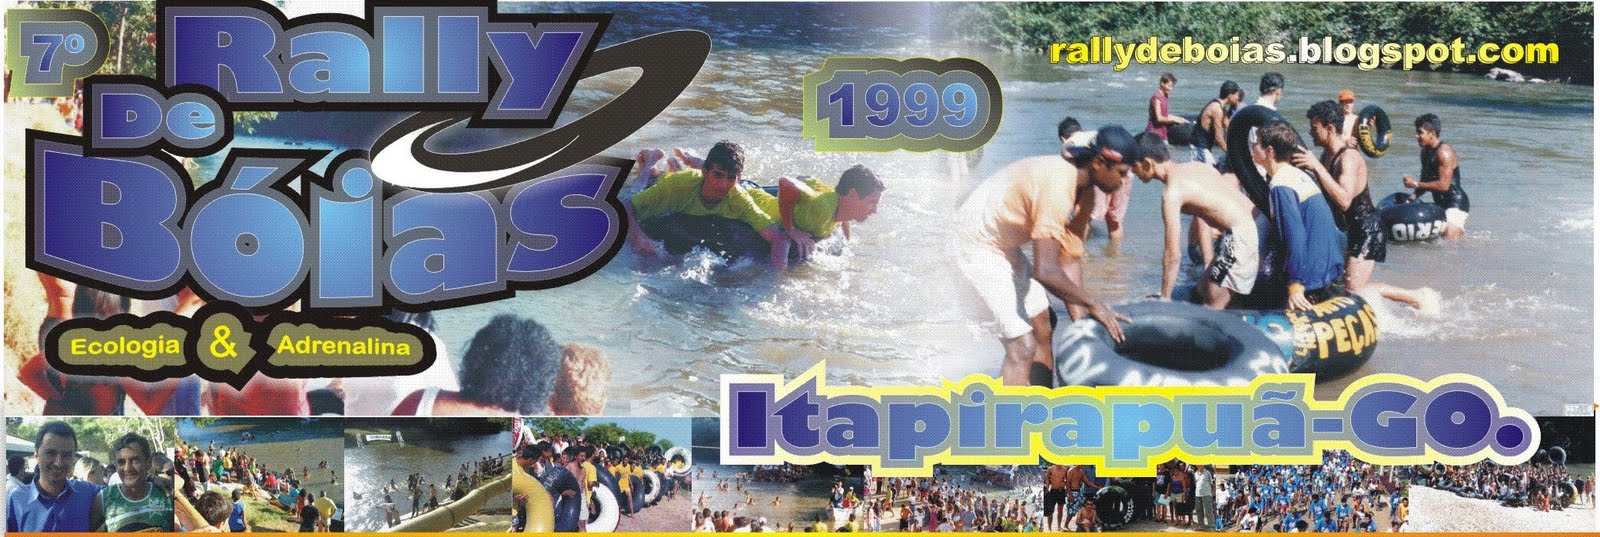 7º Rally de Bóias de Itapirapuã 1999